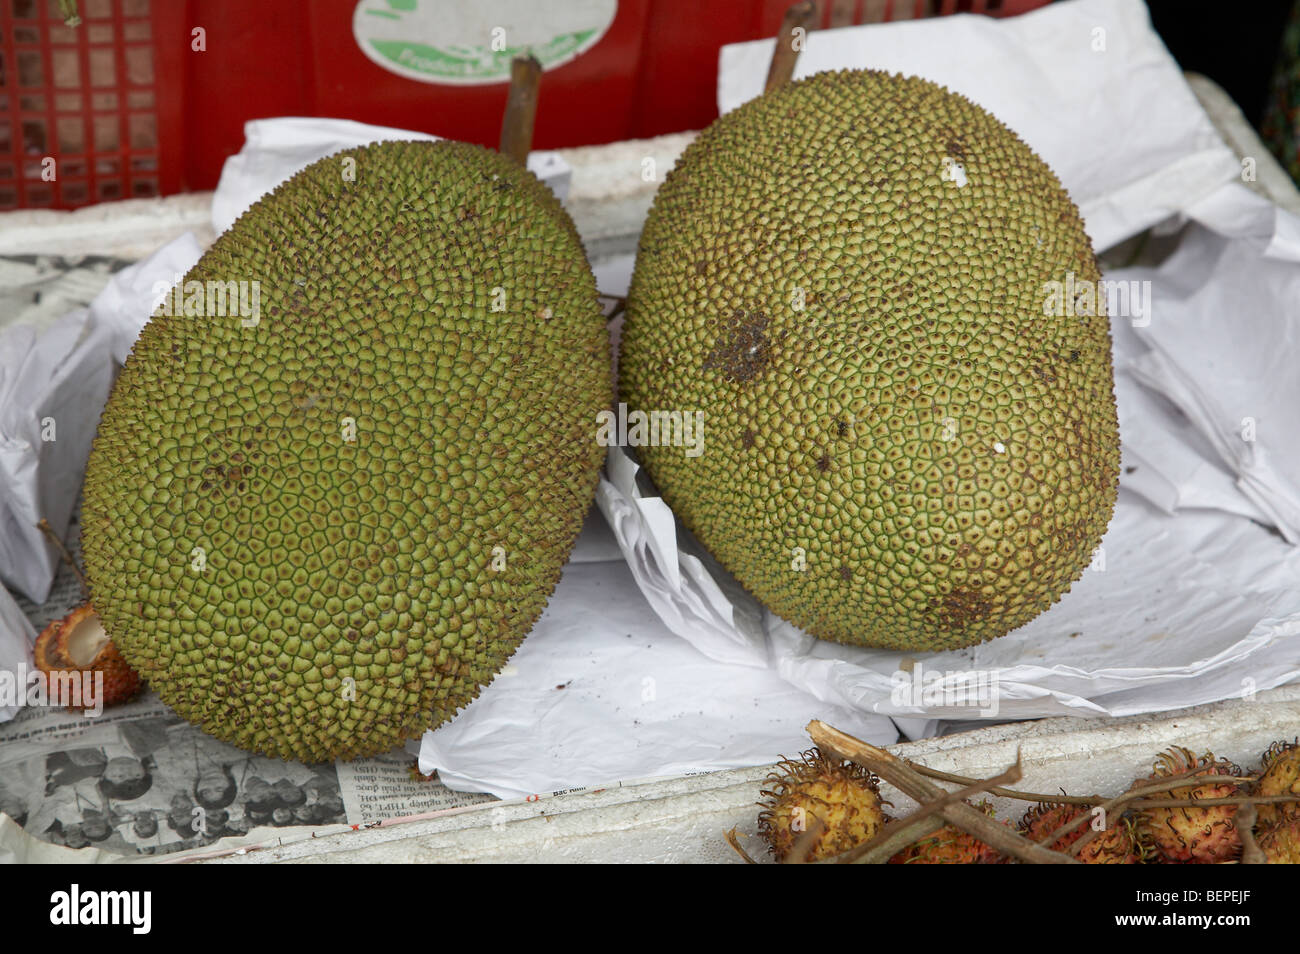 Il Vietnam Saigon mercato della frutta. Nome: Jackfruit altri nomi: Jak, Jaca, Phanas Nome Botanico: Artocarpus heterophyllus Foto Stock